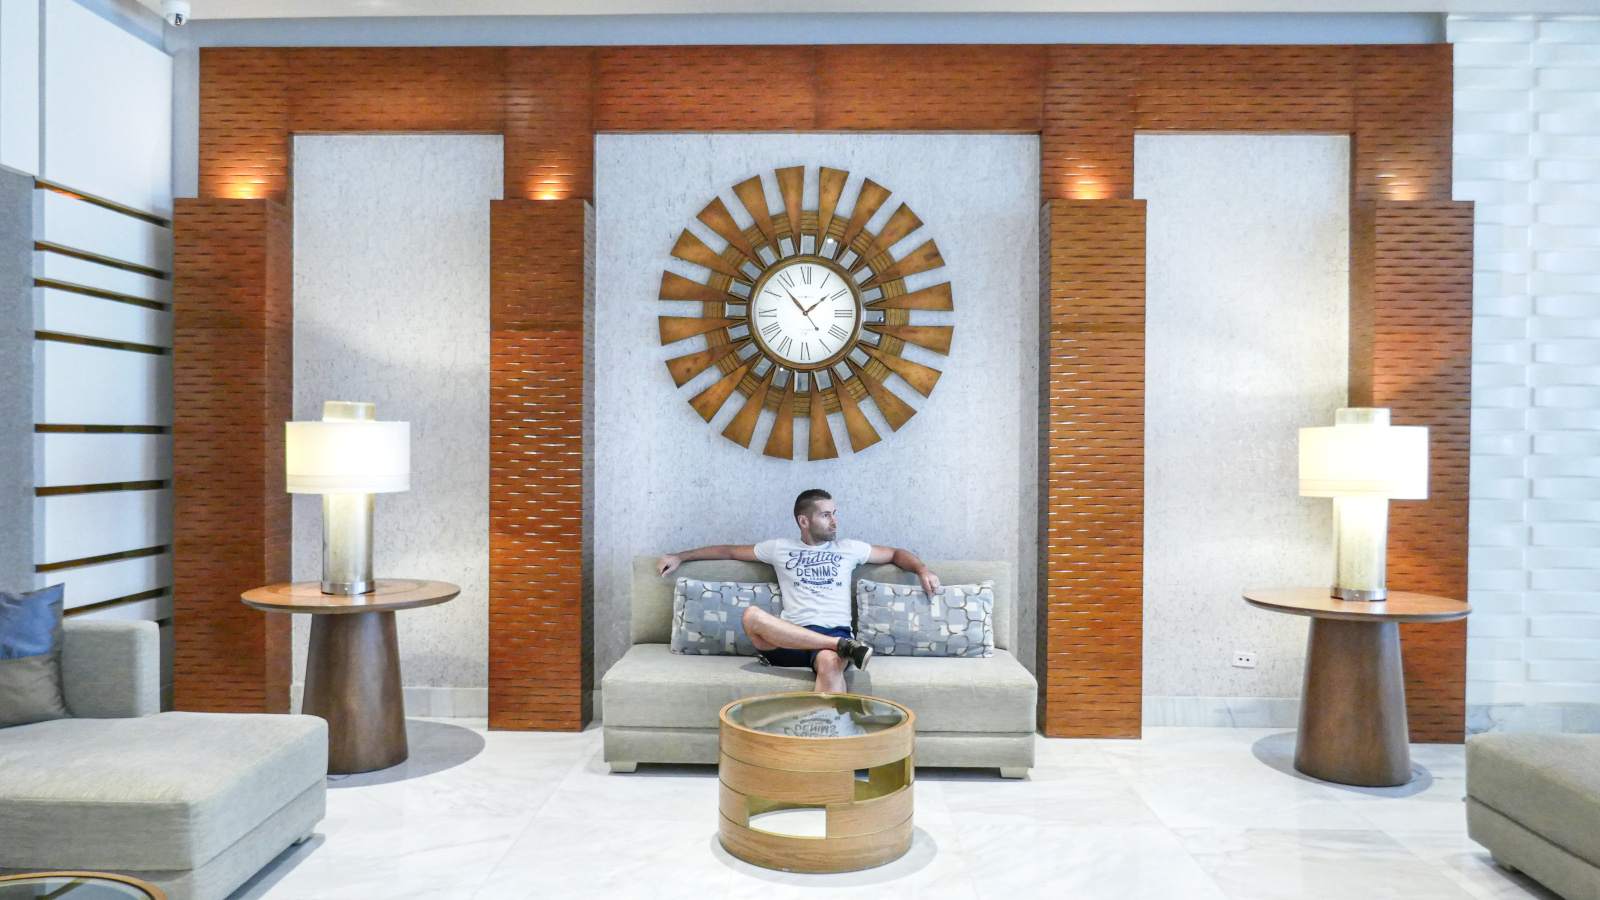 Waldorf Astoria is agay frienldly luxury hotel in Panama city